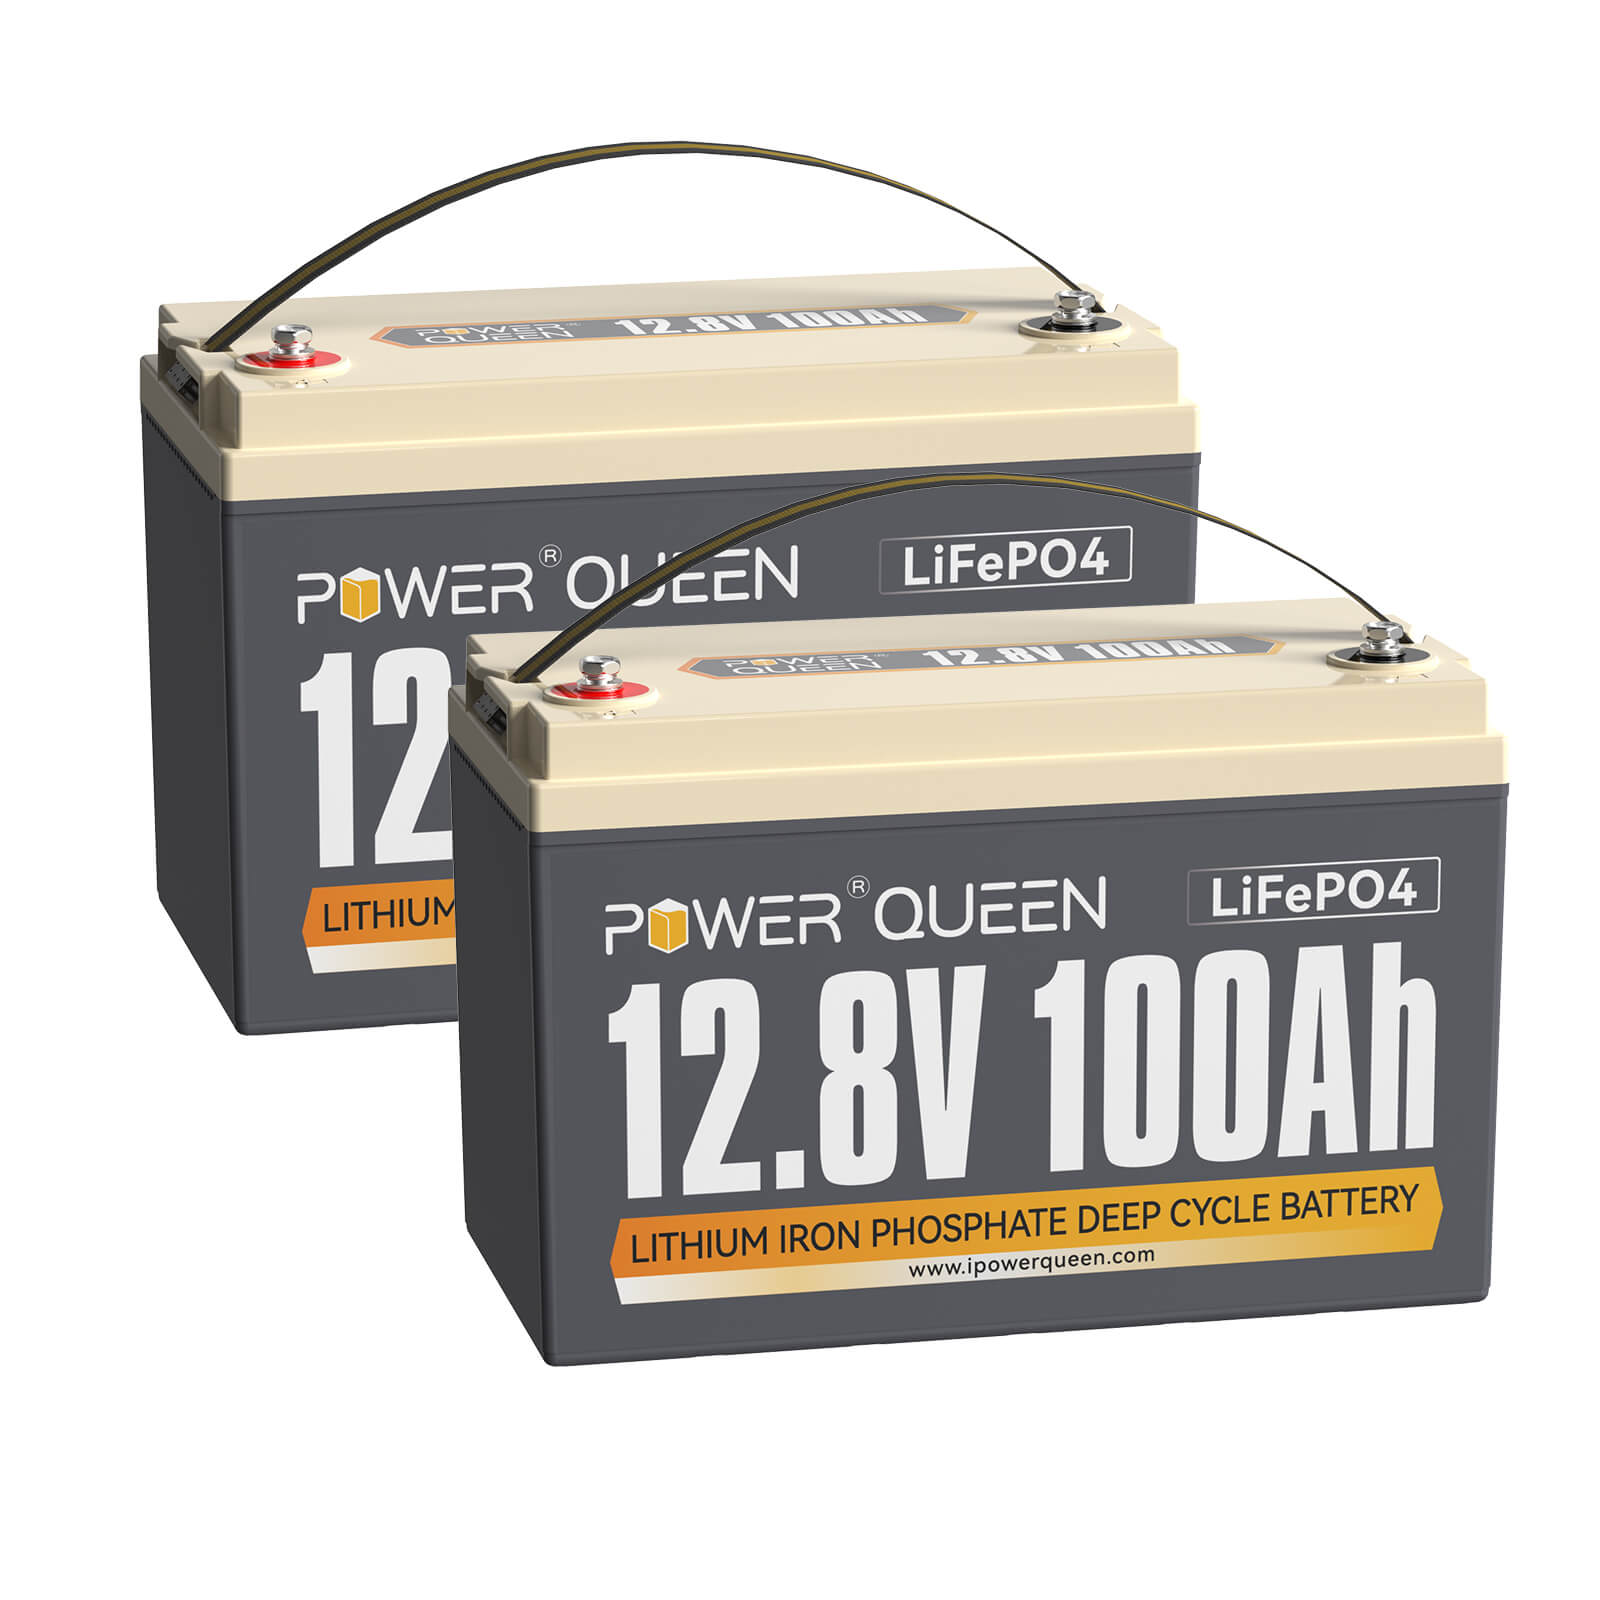 Power Queen 12,8V 100Ah LiFePO4 Batterie, mit Eingebautem 100A BMS